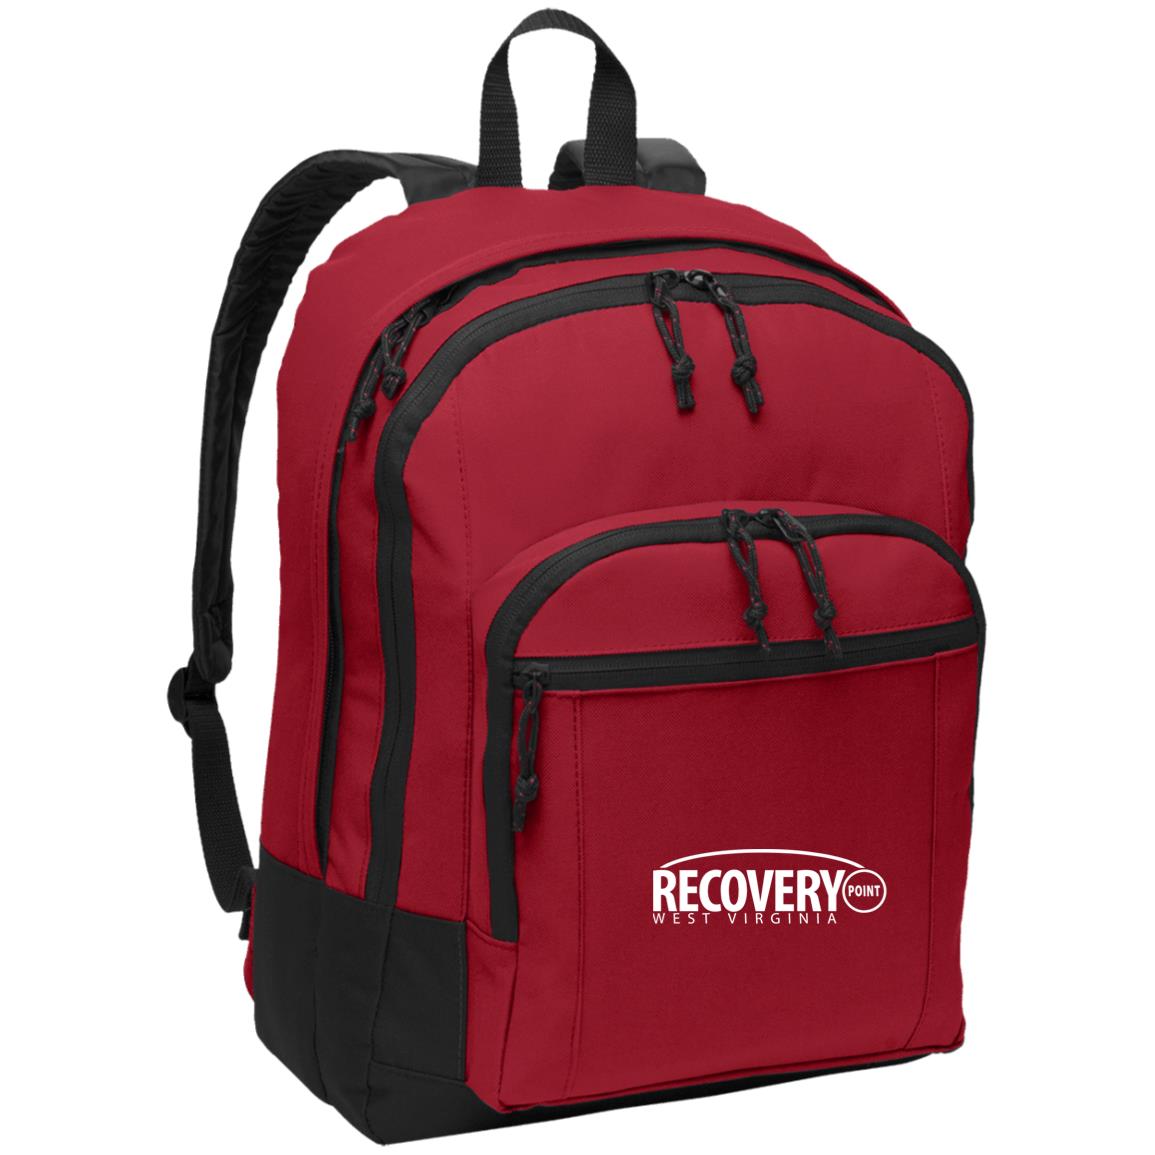 Branded Backpack